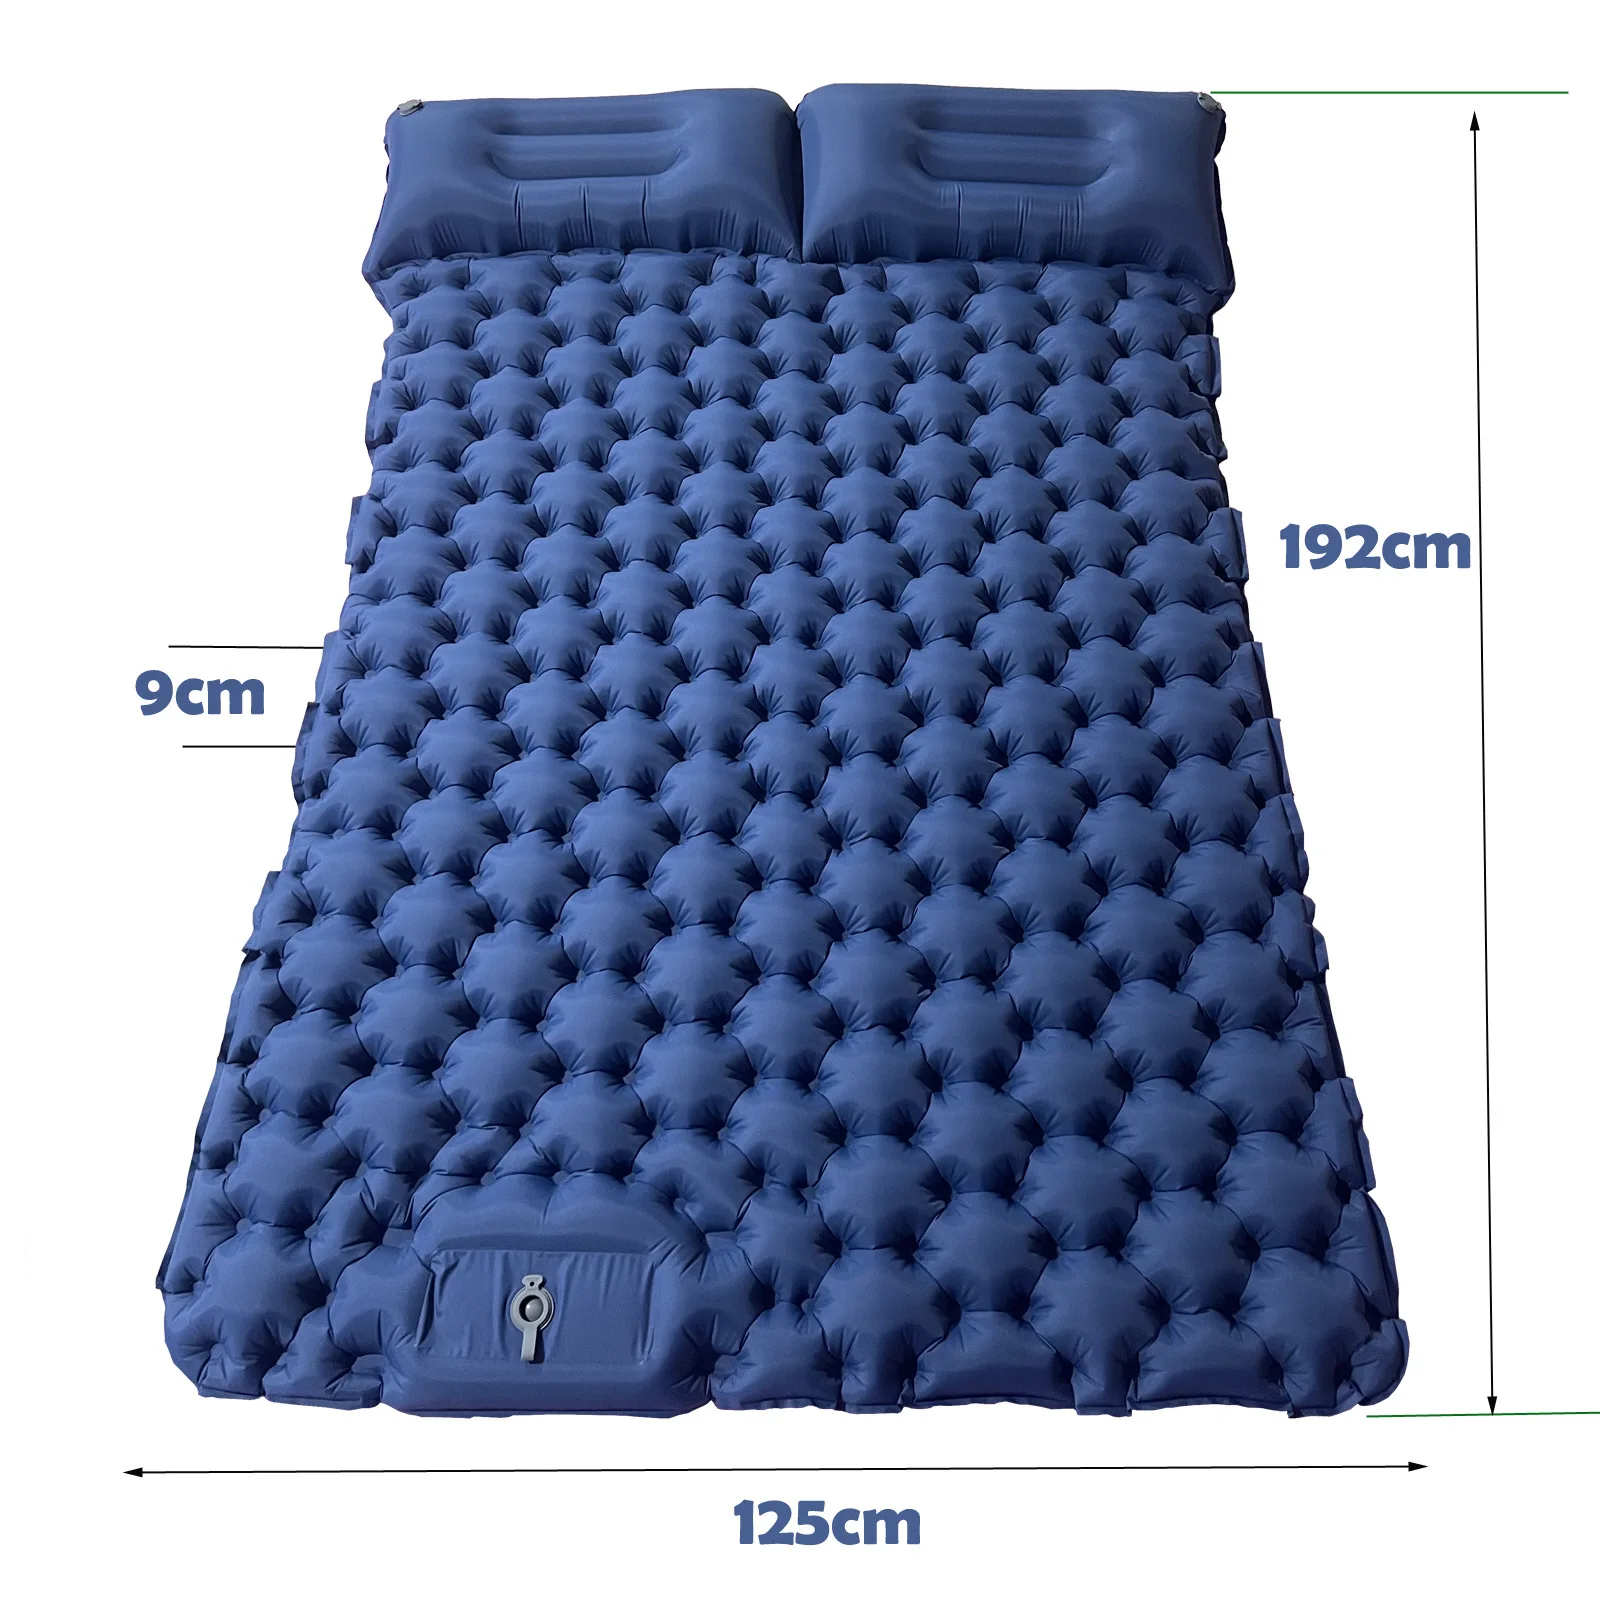 Double Camping Sleeping Mat Inflatable Outdoor Mattress with Pillow Travel Mat Ultralight Air Cushion Hiking Trekking Tool